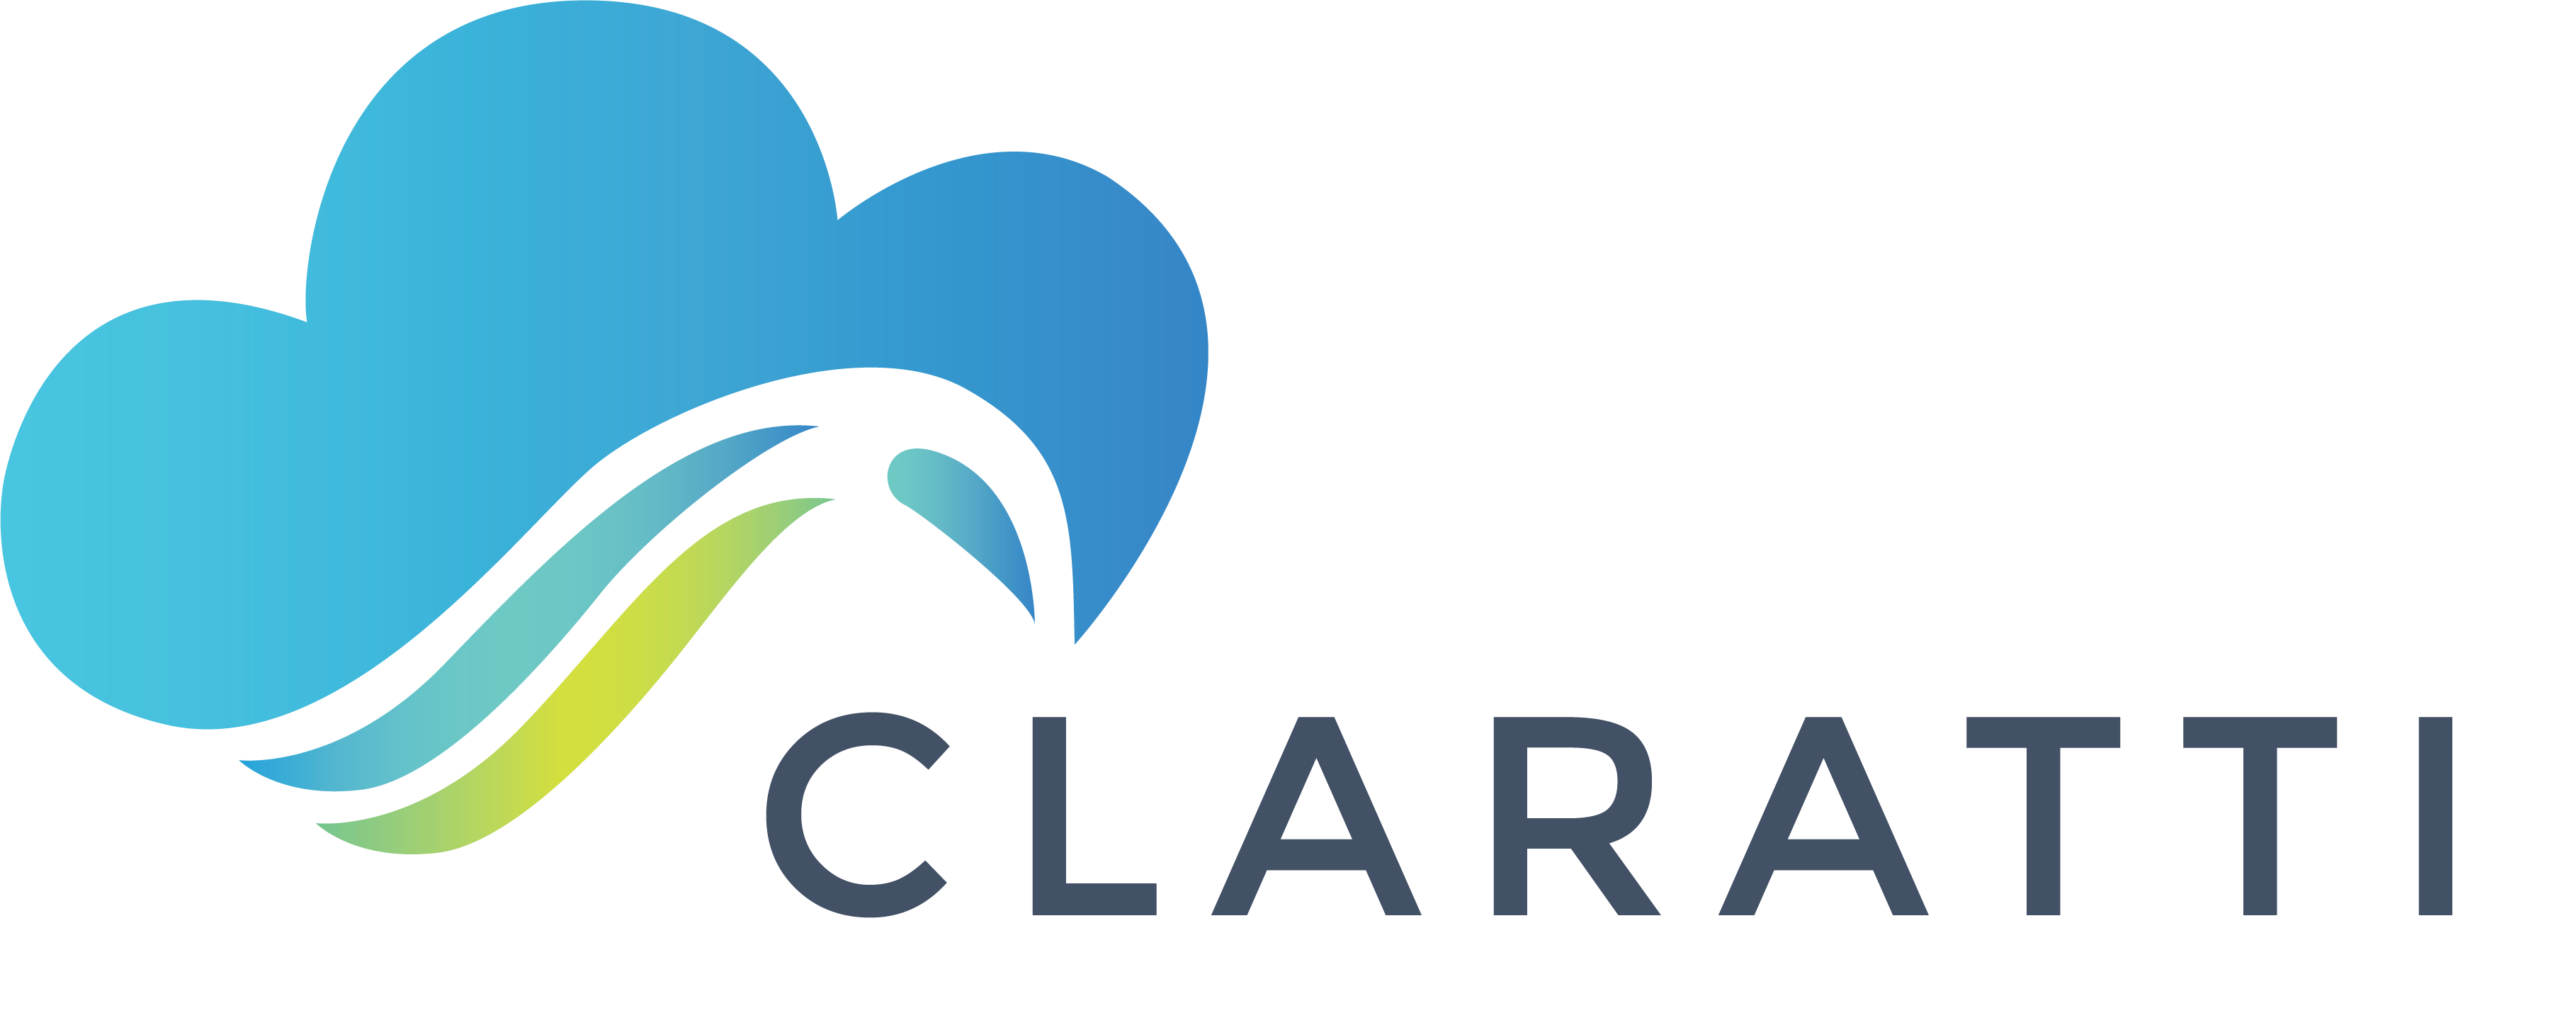 Claratti logo